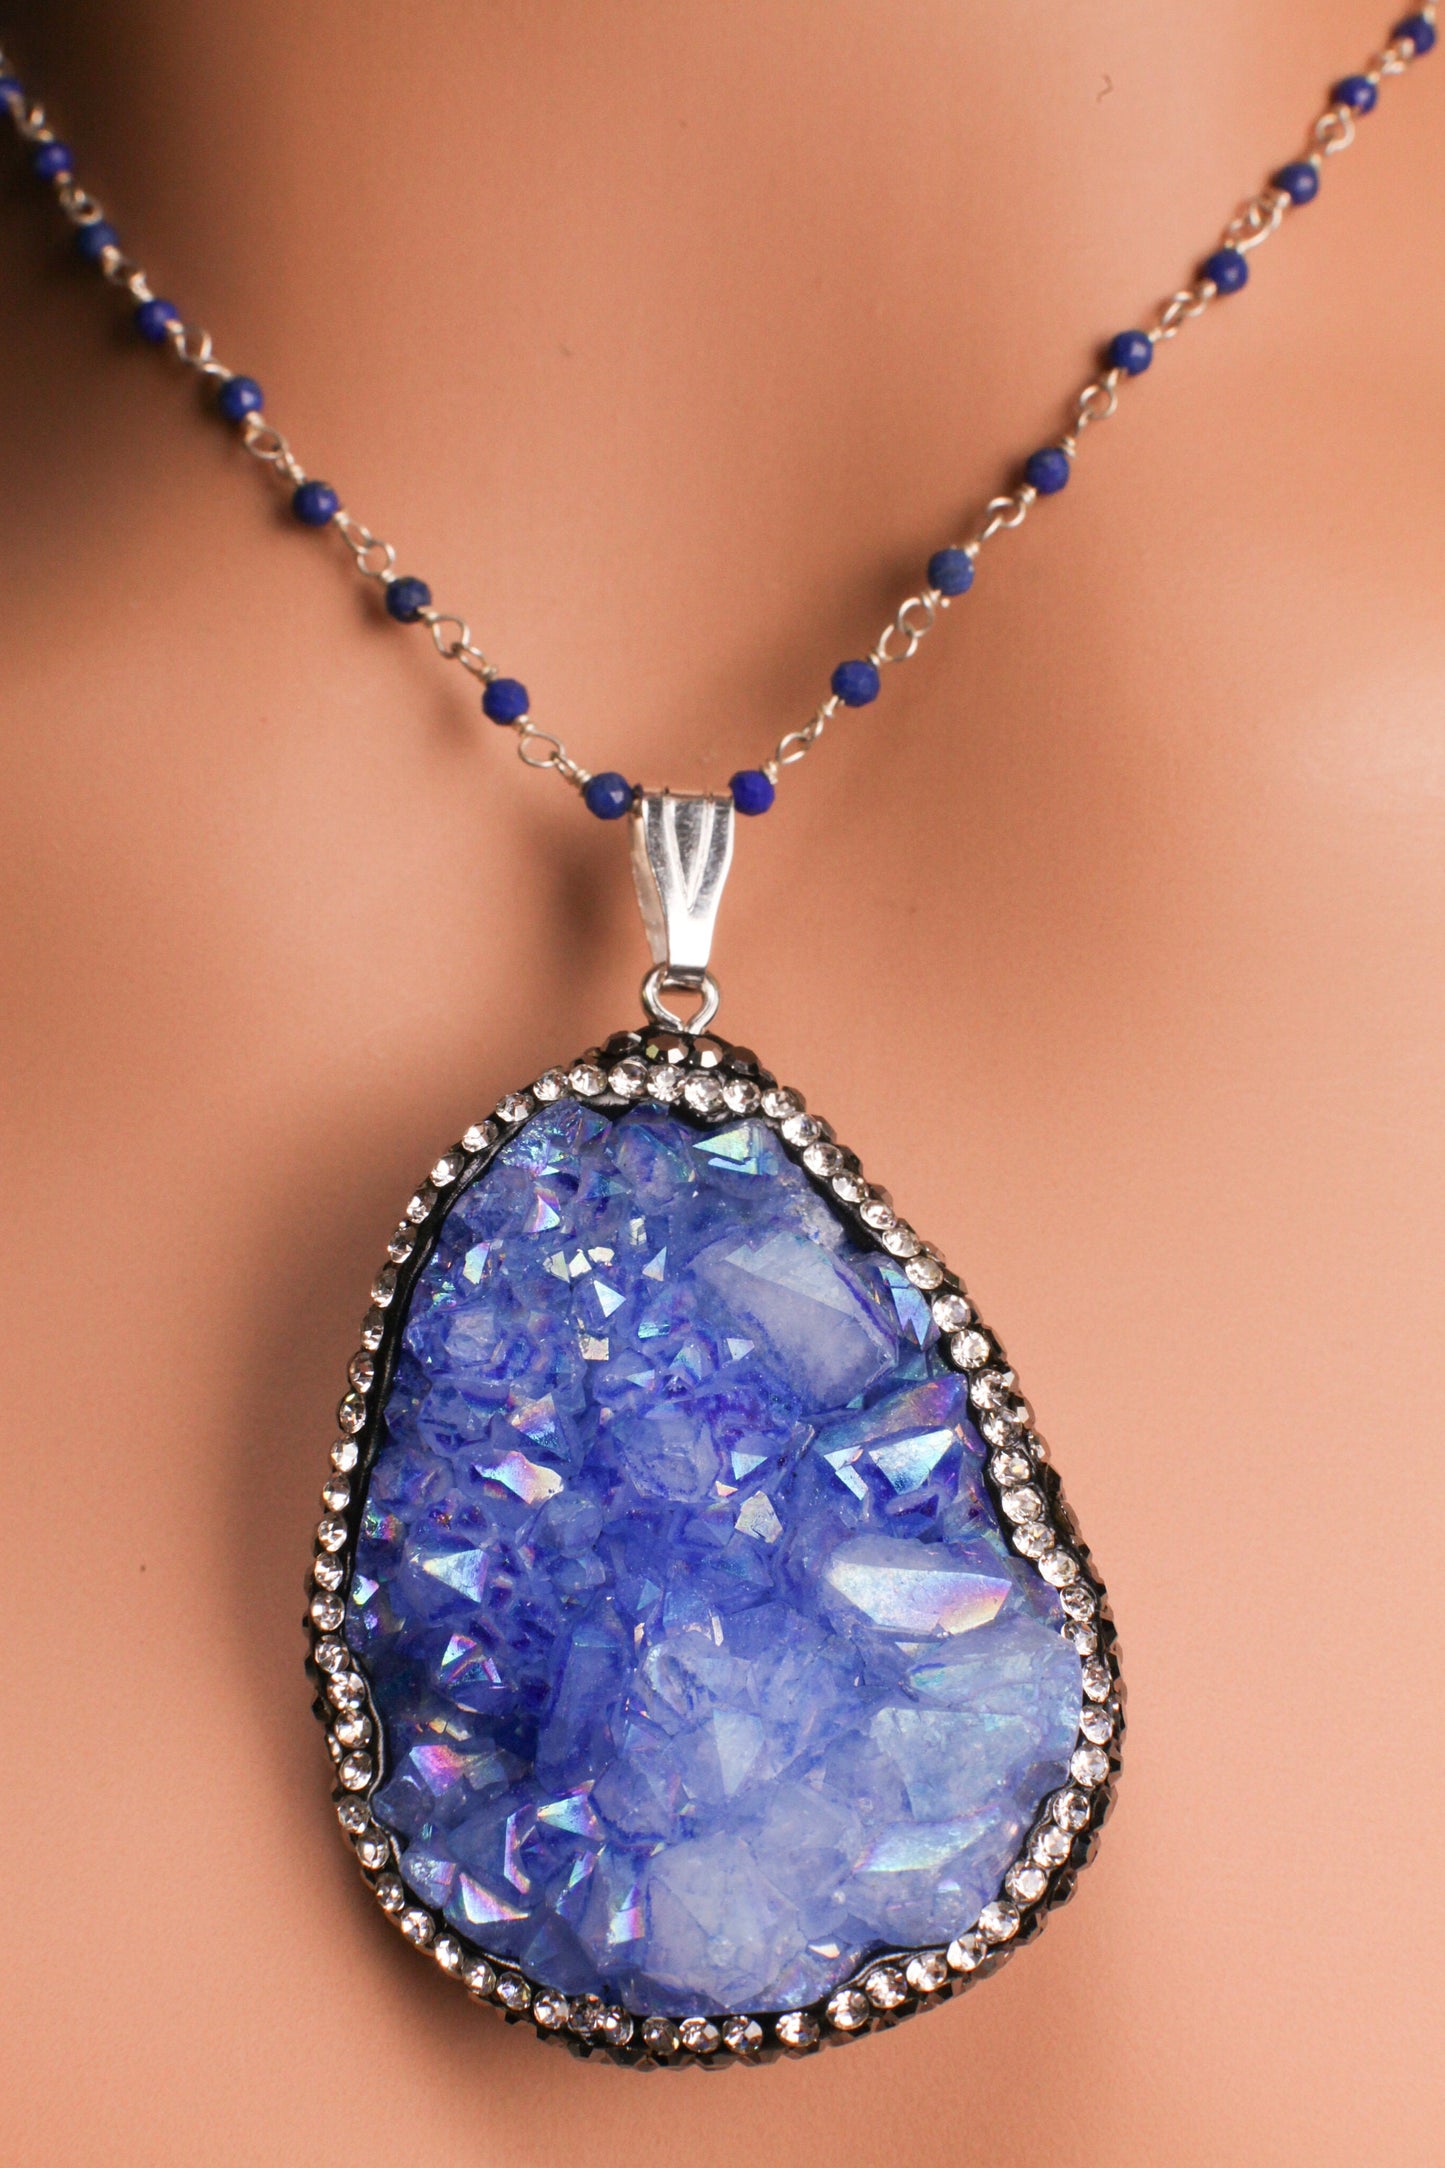 Natural Druzy Agate Auroa Borealis Blue Geode Pendant 36x48mm Handmade Rhinestone and Lapis Gemstone Chain Oxidized Sterling Silver Necklace